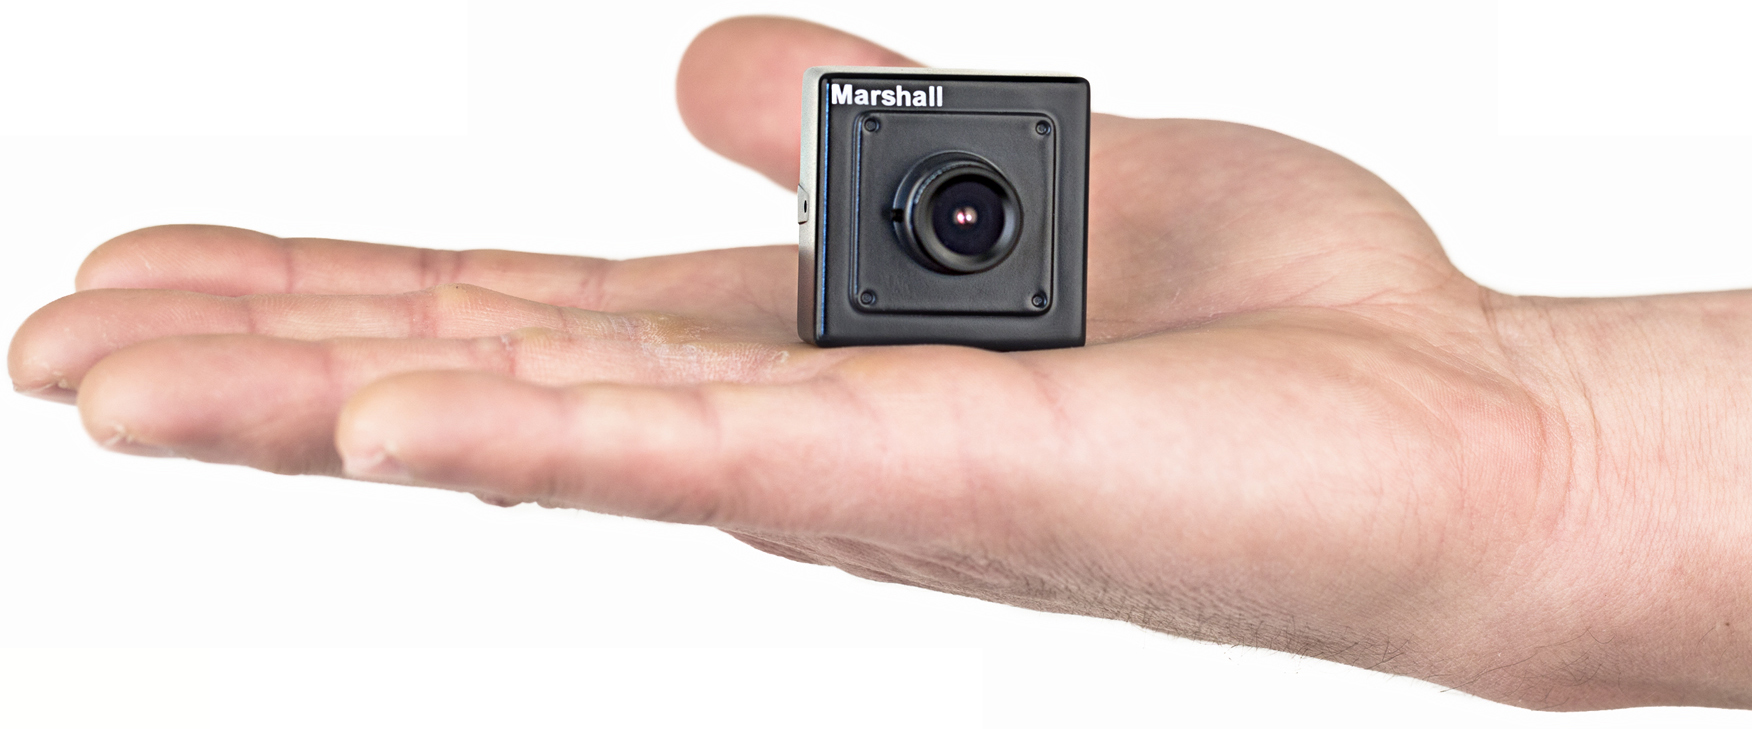 Marshall Develops Low Cost “Palm Size” Broadcast HDSDI Camera 43